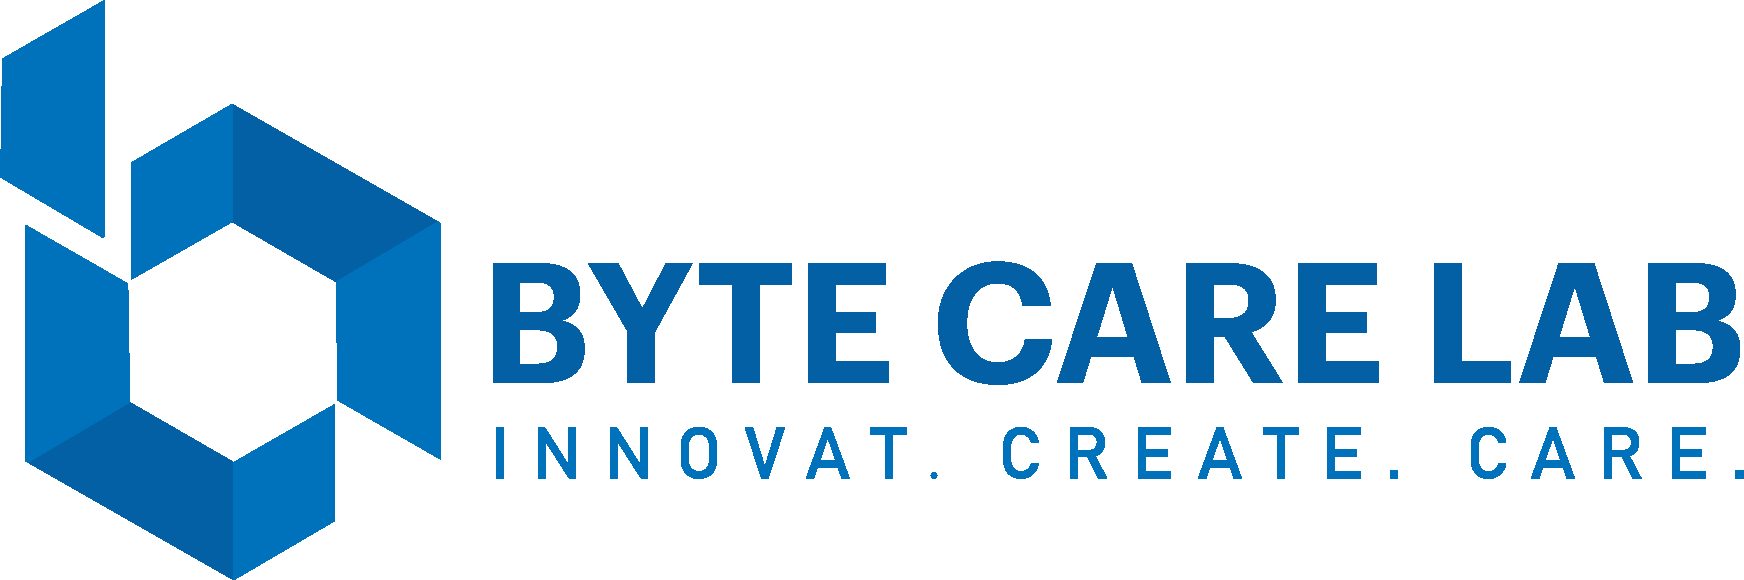 Byte Care Lab